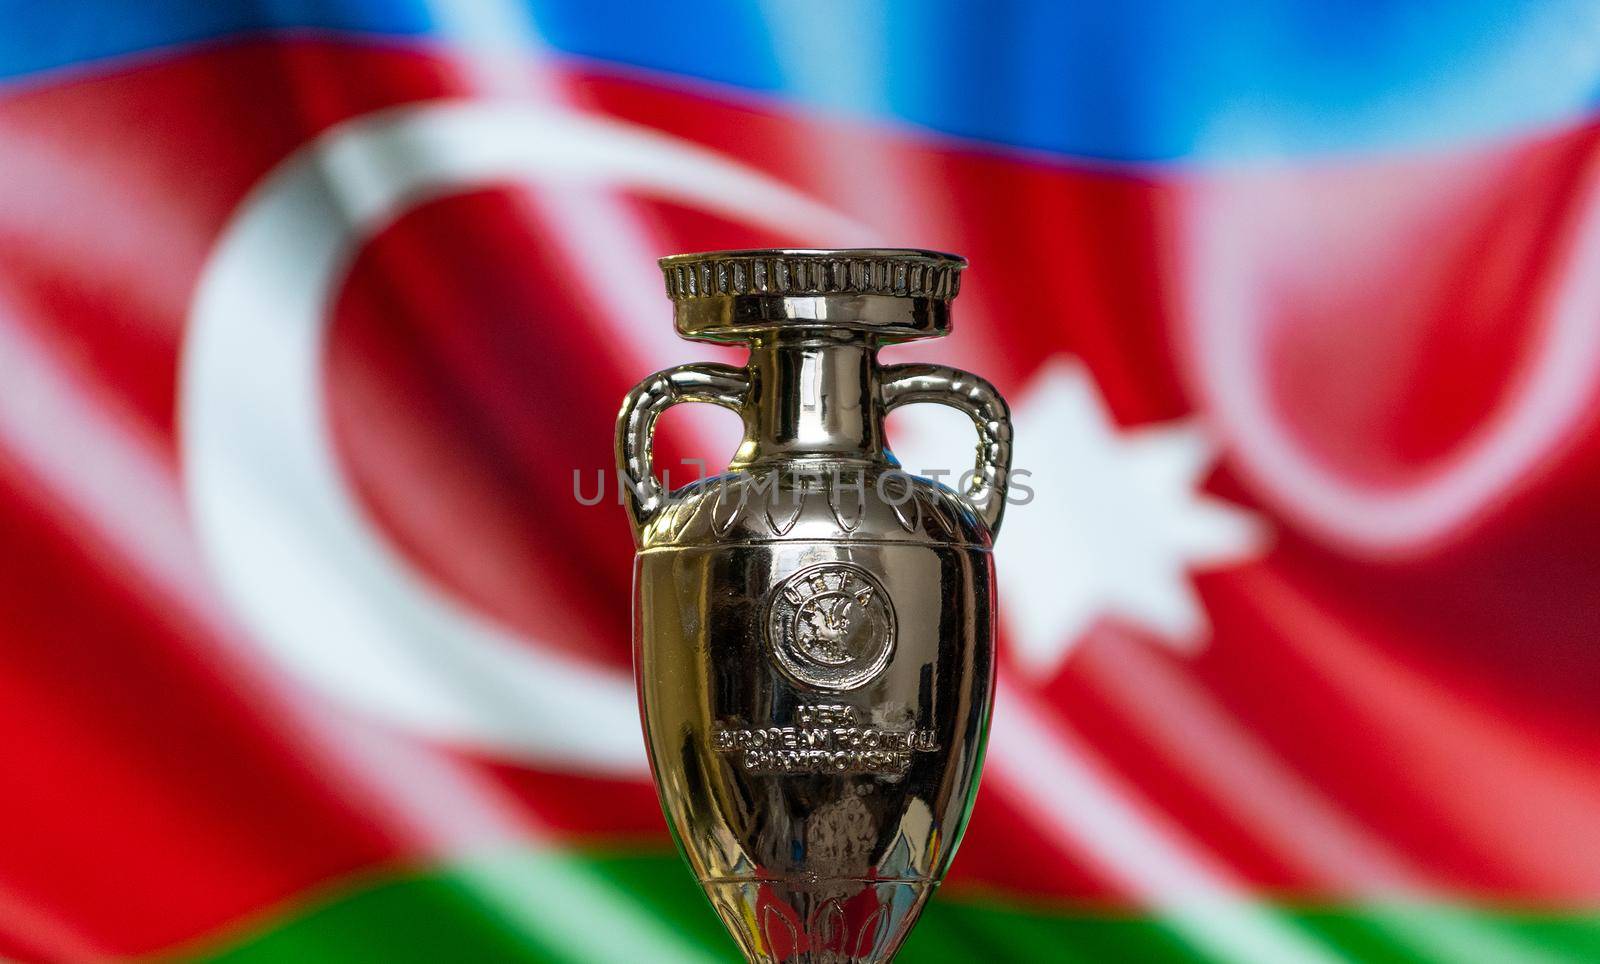 April 10, 2021. Baku, Azerbaijan. UEFA European Championship Cup against the background of the flag of Azerbaijan.